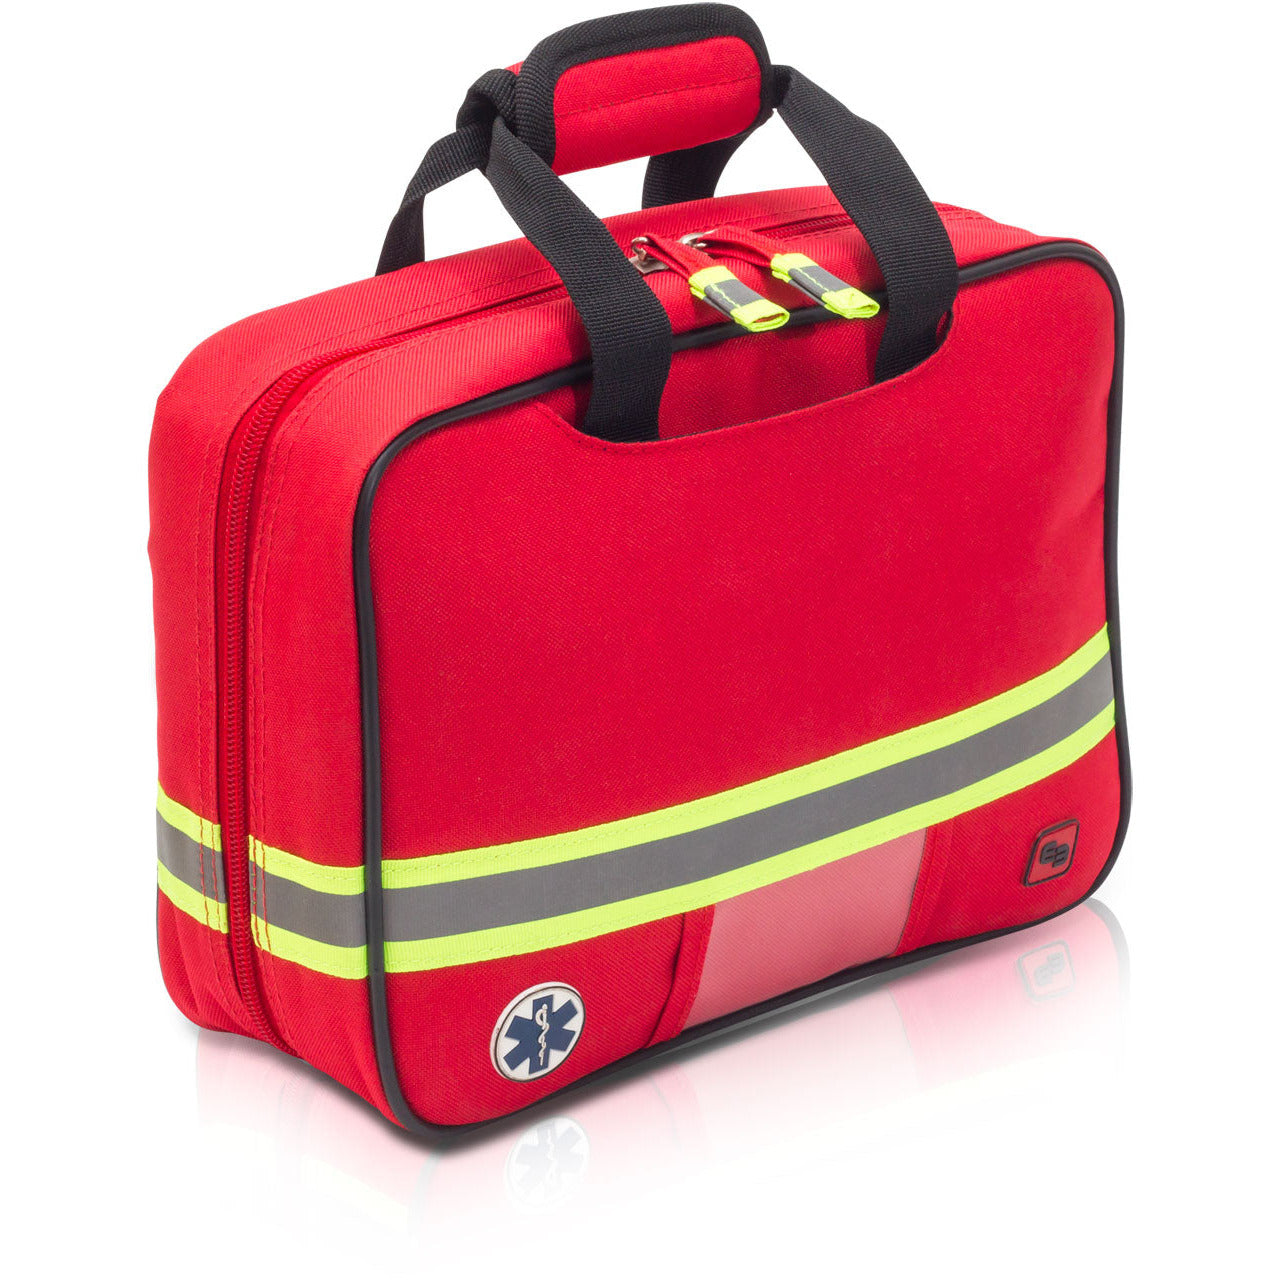 Elite Bags Emergency Light Transport Trauma Bags